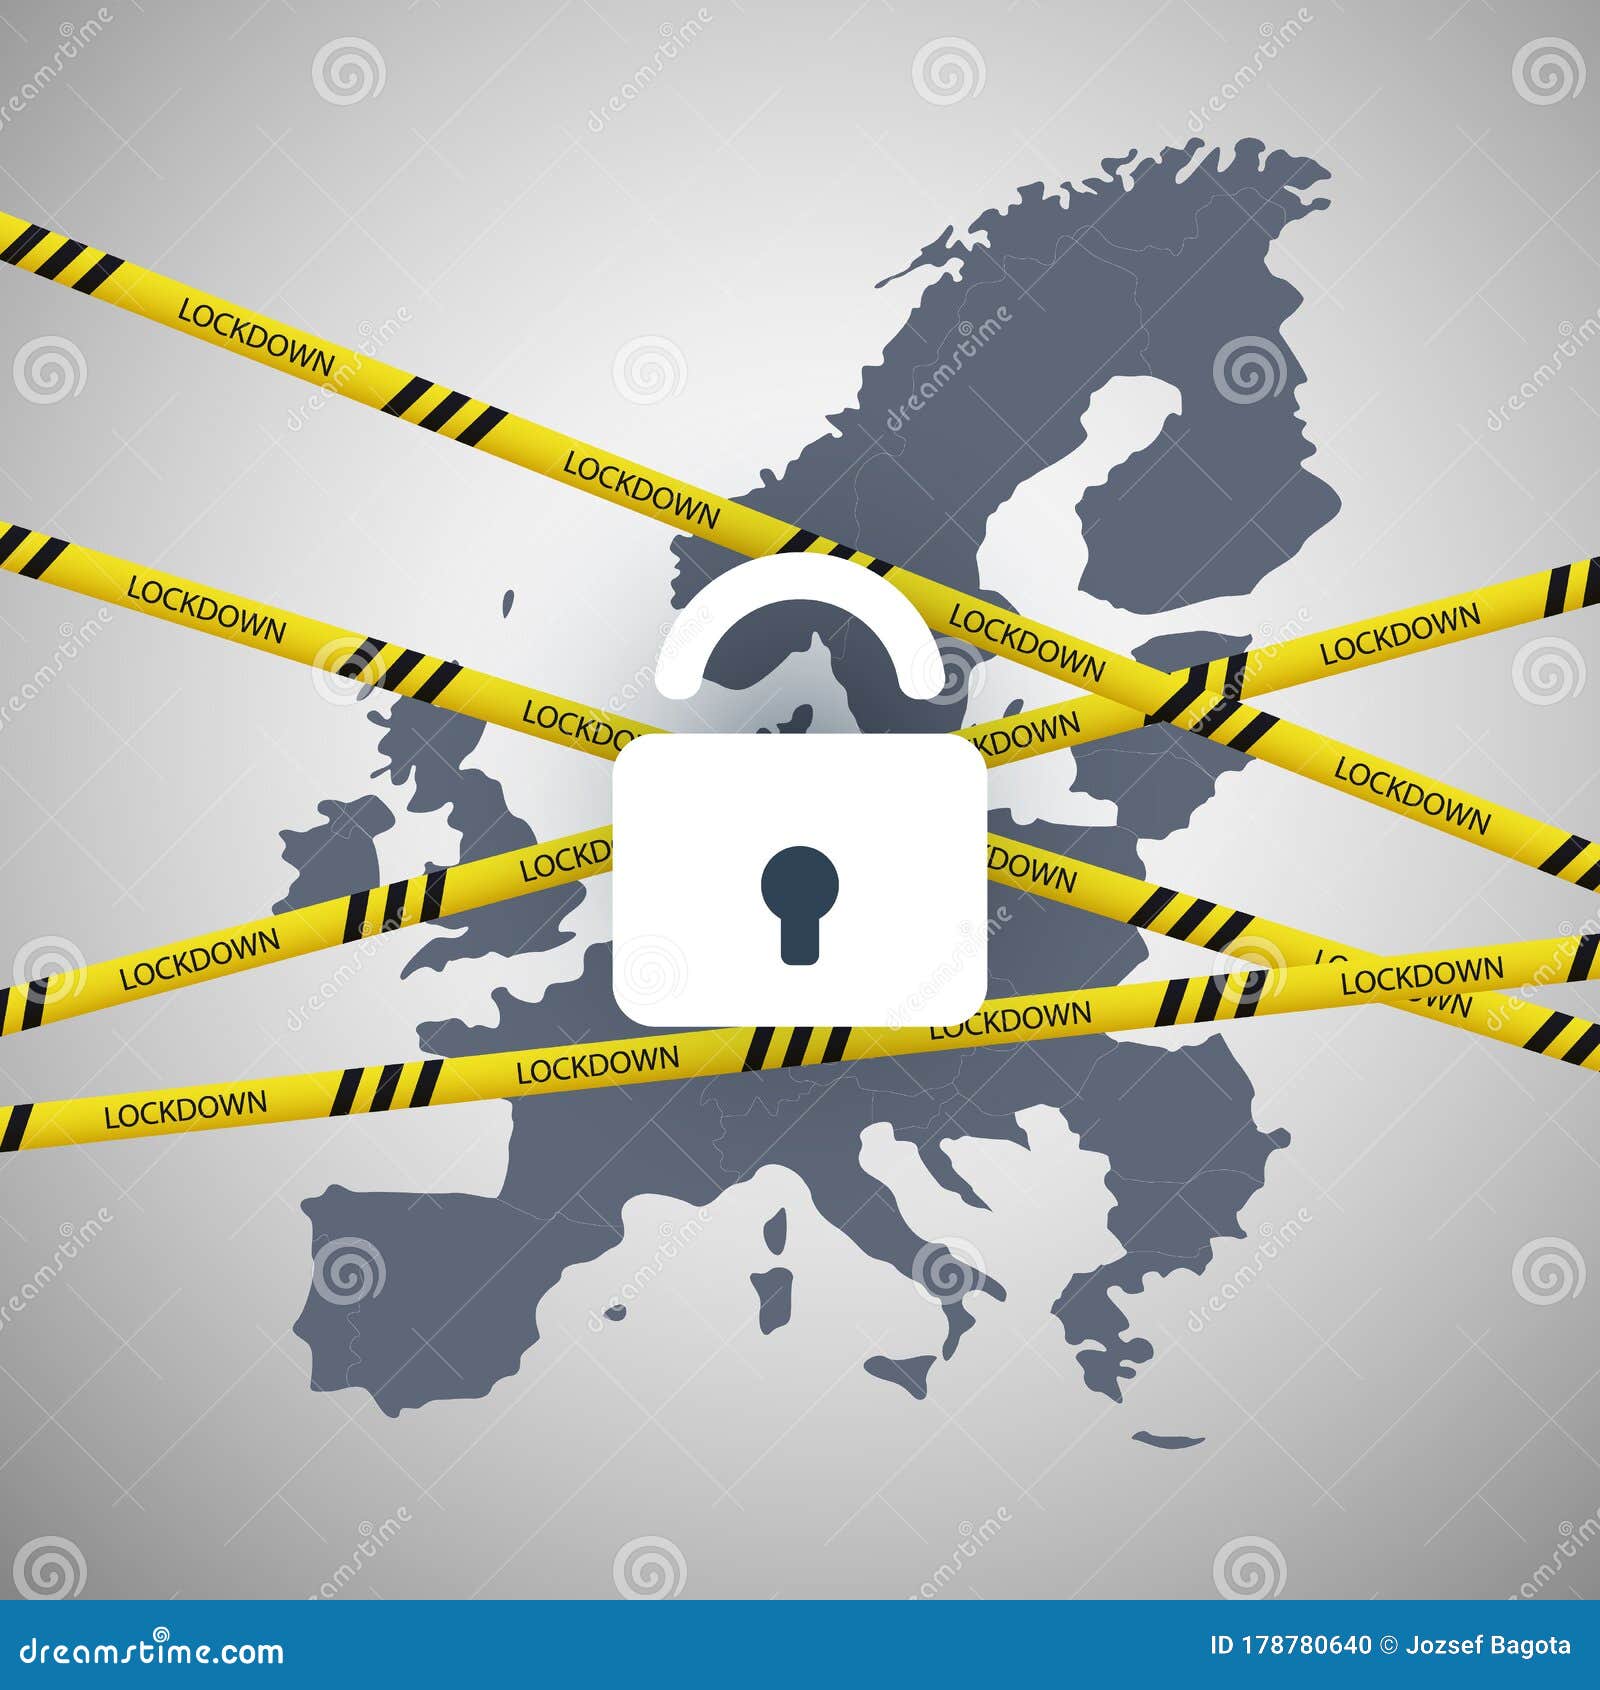 lockdown in the european union